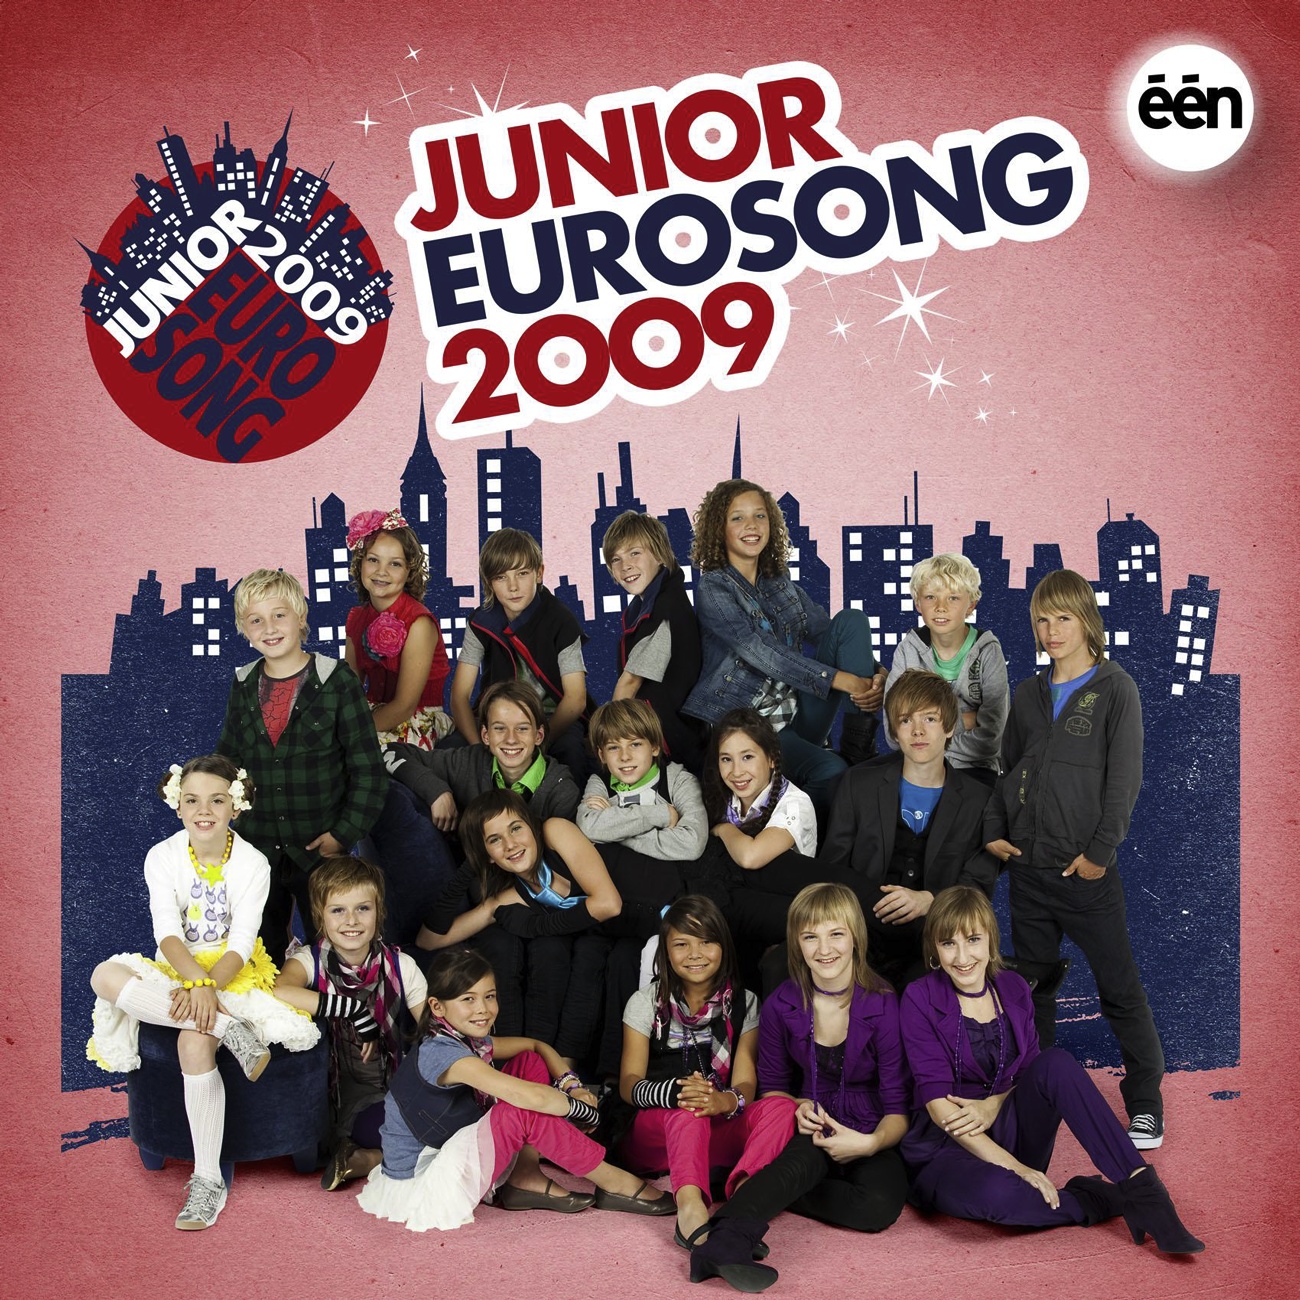 Junior Eurosong 2009